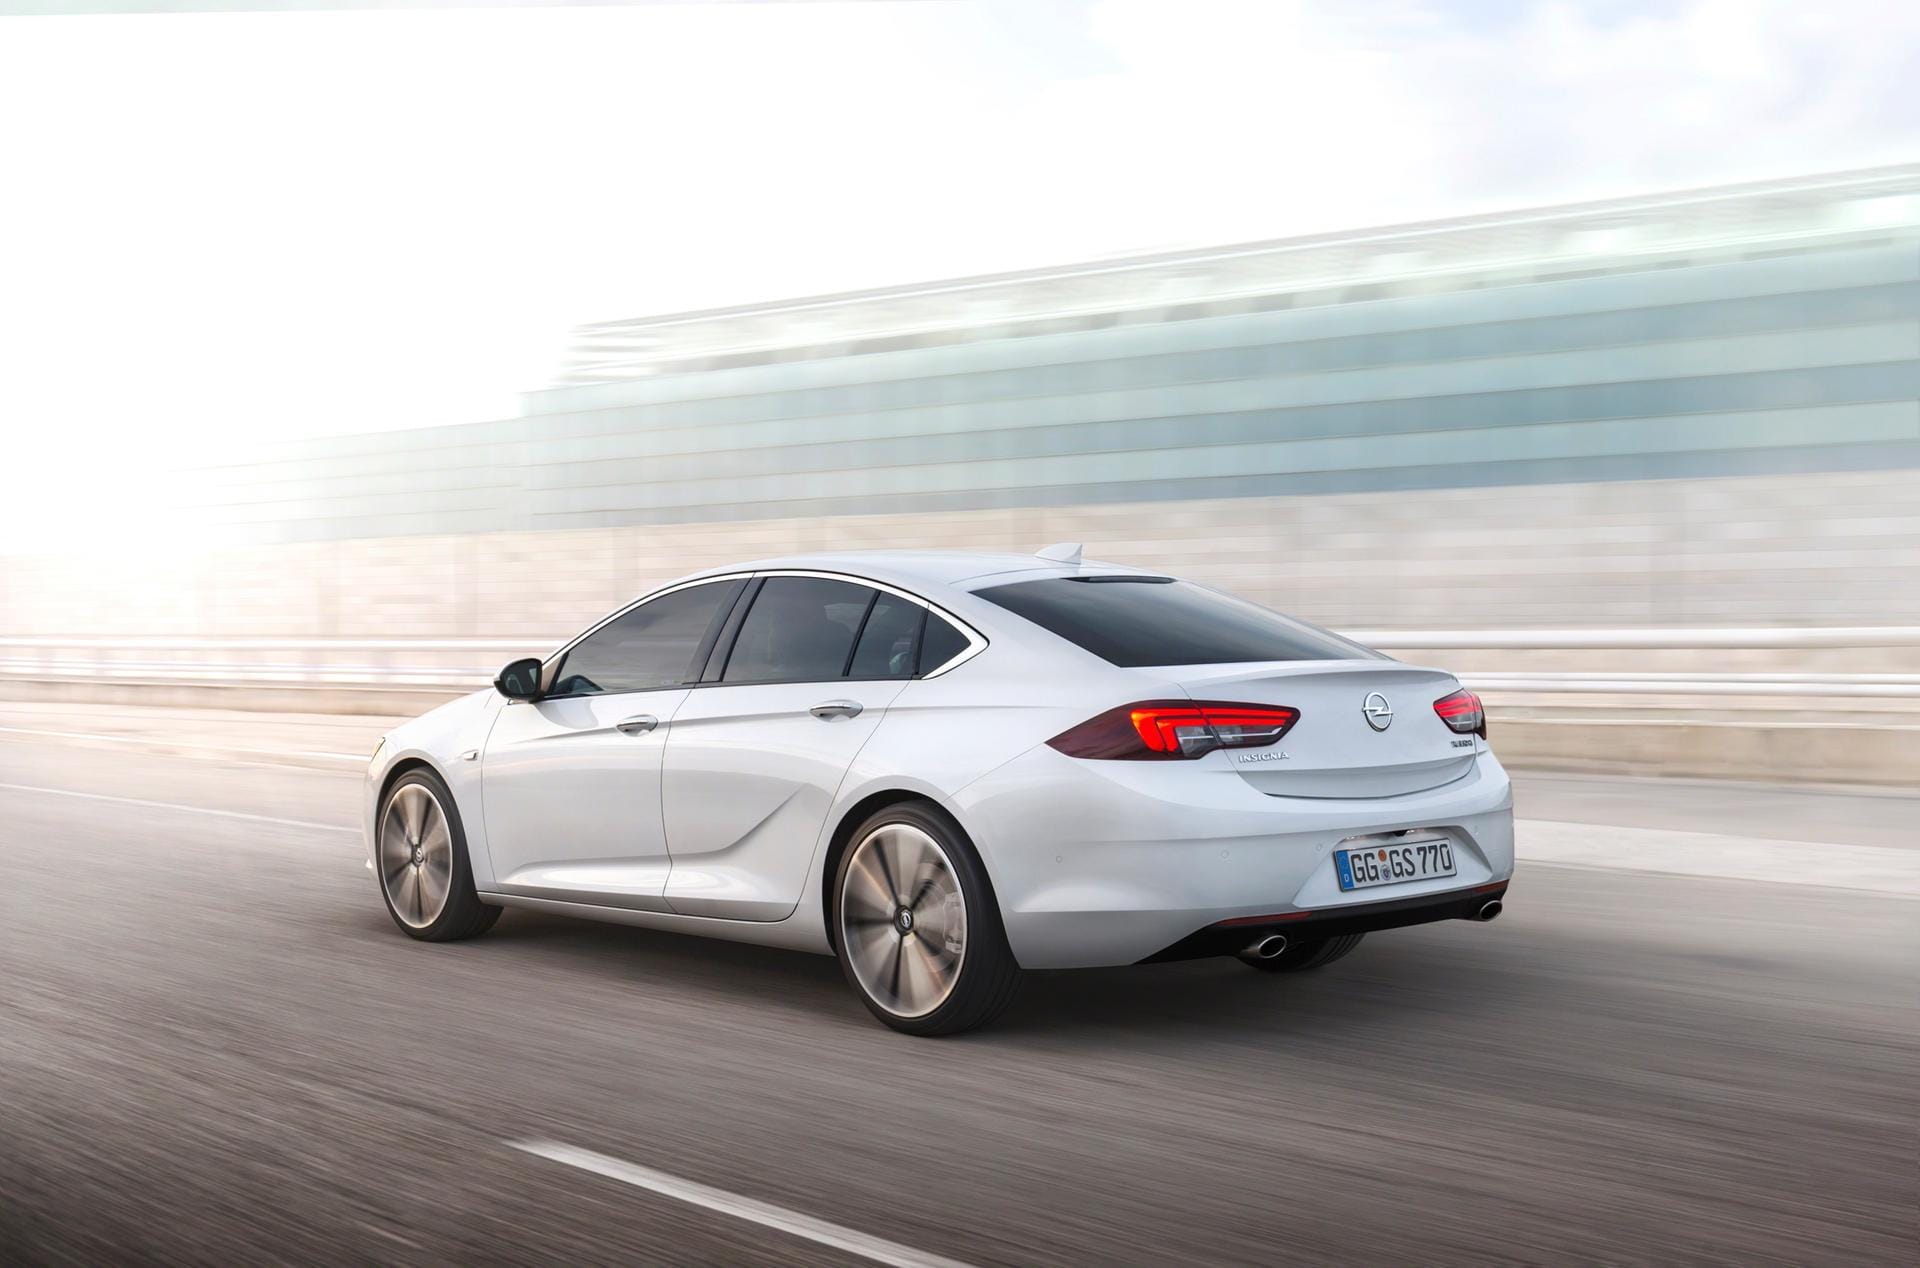 Laut Opel soll der Luftwiderstandsbeiwert des Insignia Grand Sport bei 0,26 liegen.